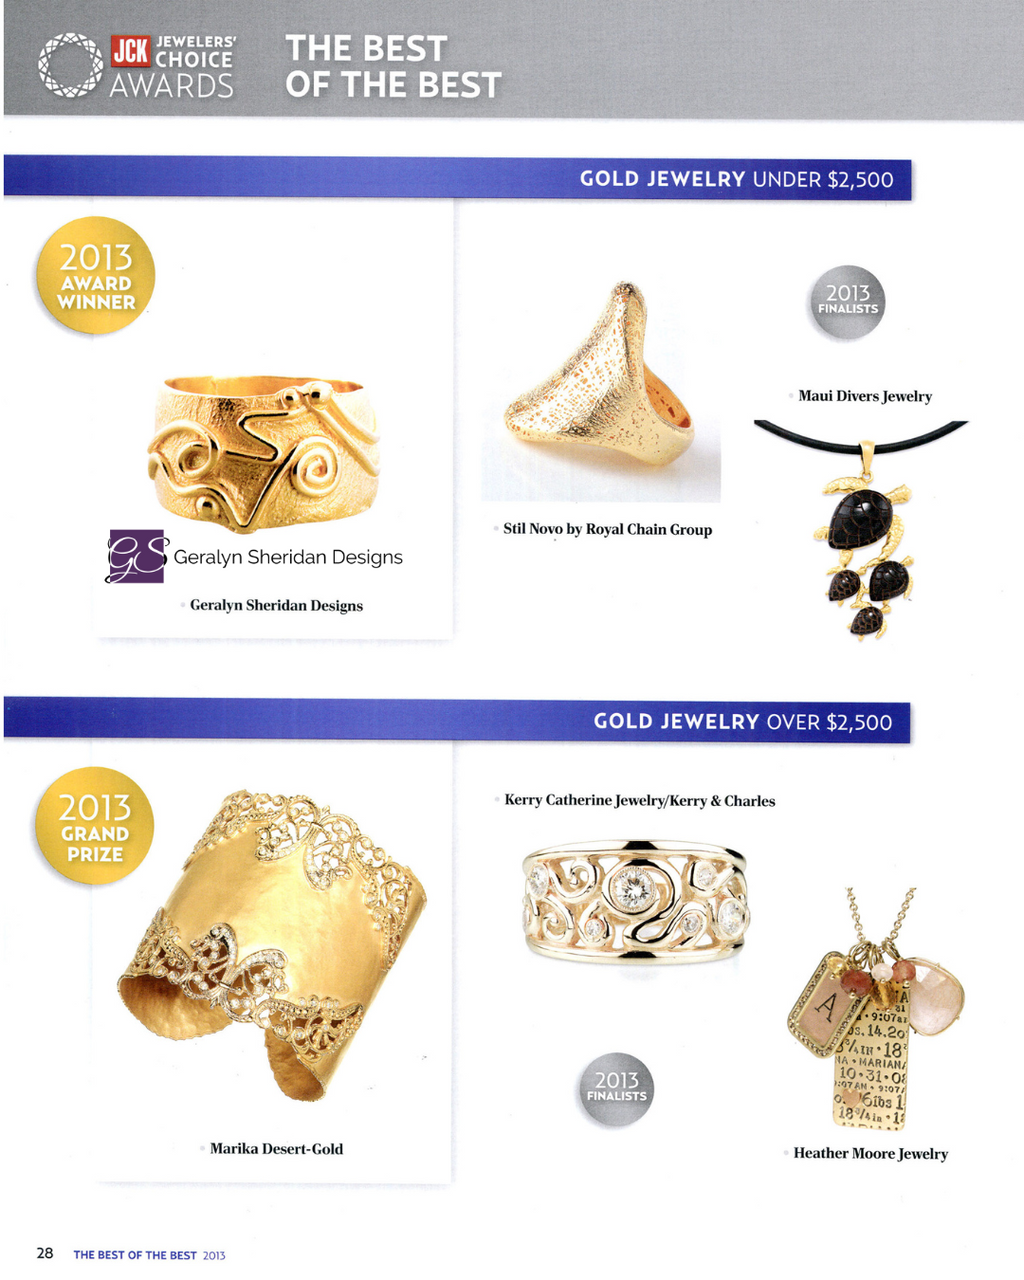 Geralyn Sheridan Designs | JCK Jewelers Choice Awards 2013 winner